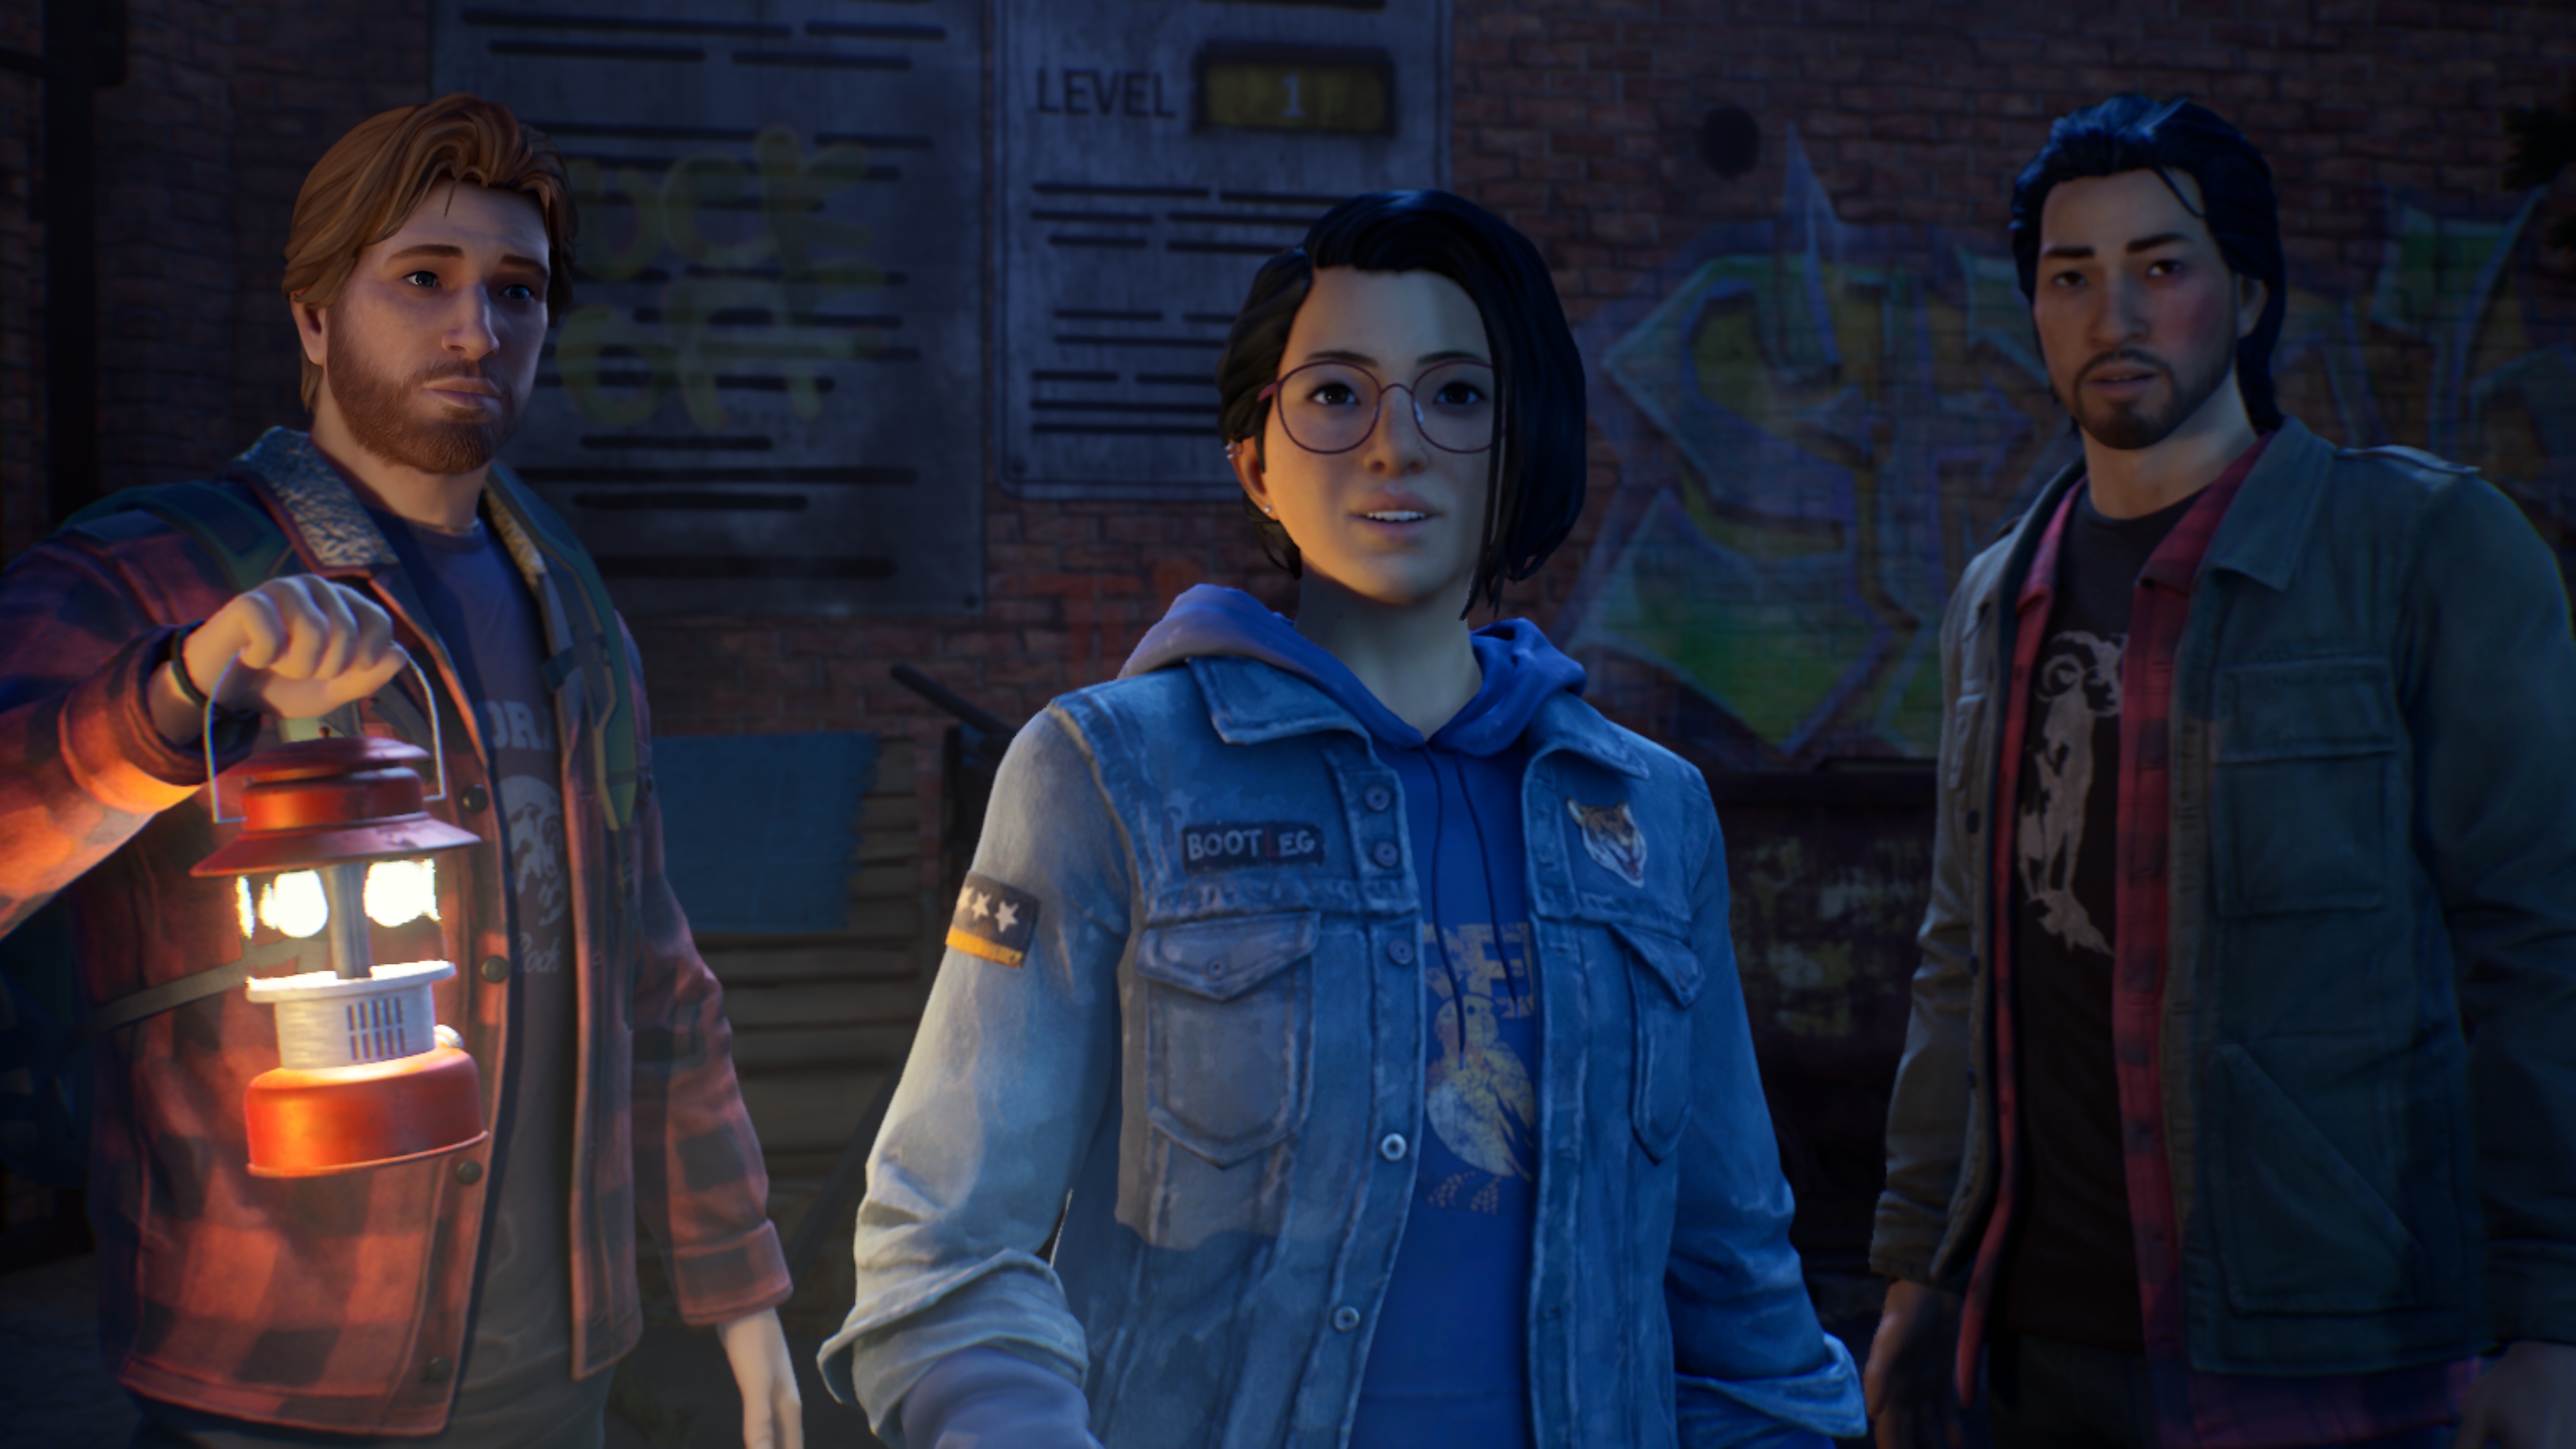 Life Is Strange True Colors captura de pantalla mostrando a tres personajes mirando hacia la cámara